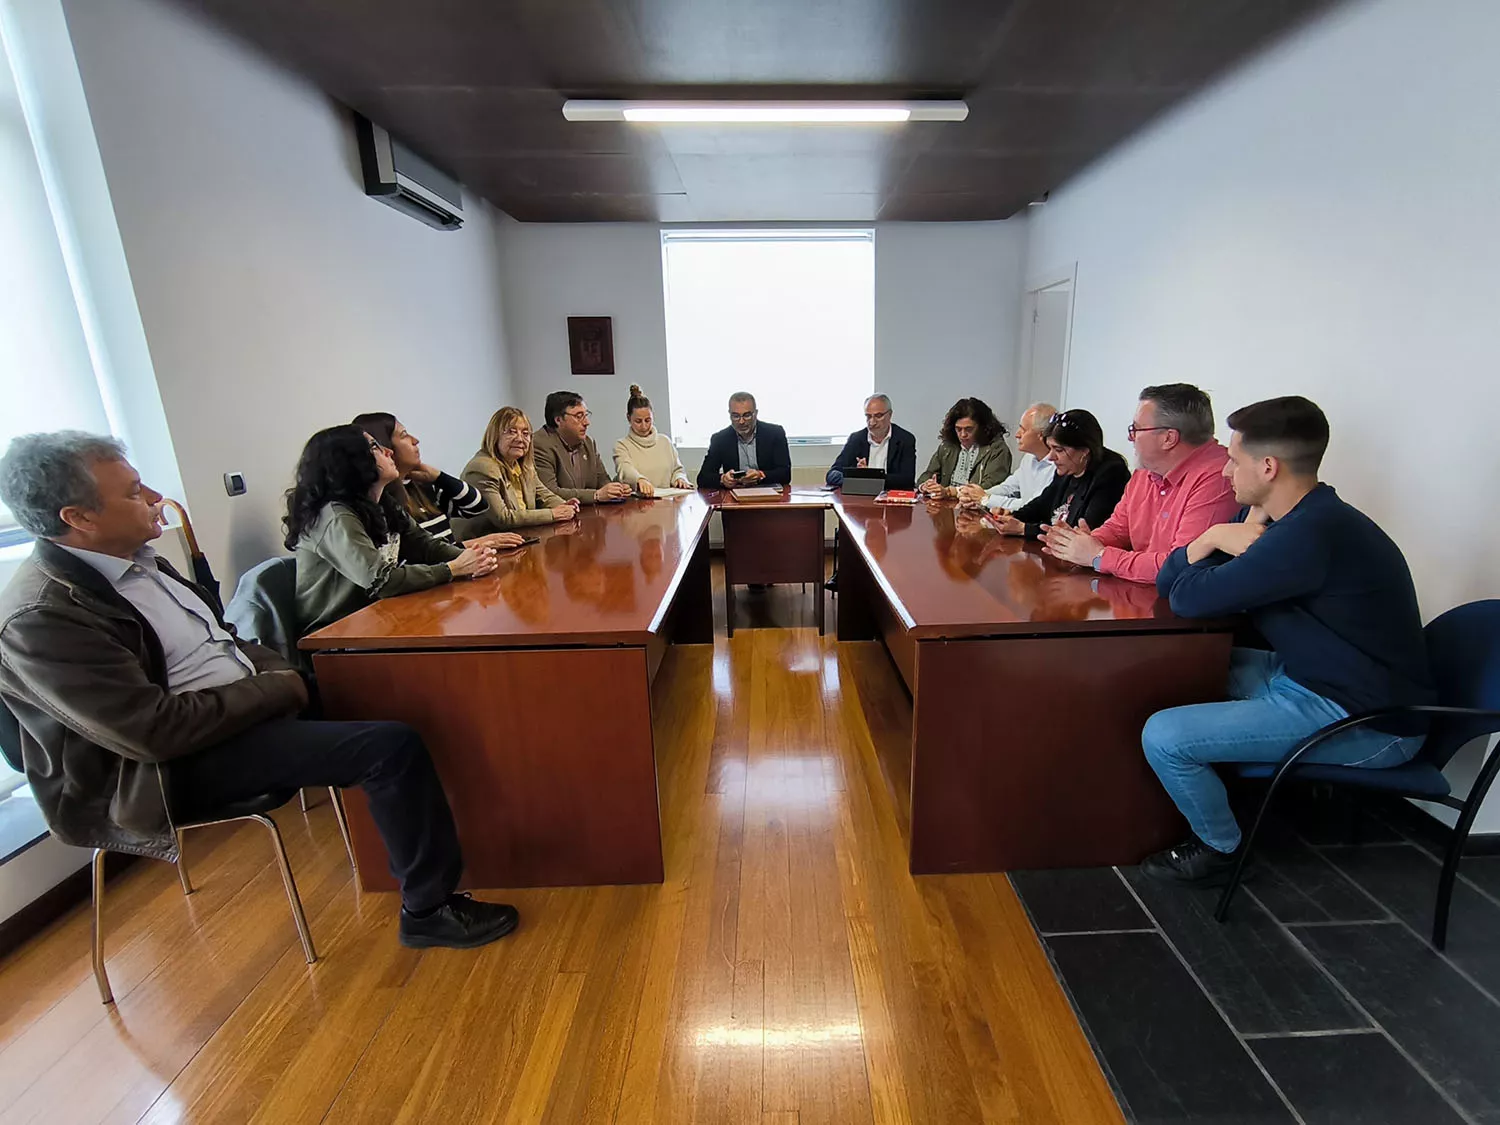 Visita institucional del Consejo Comarcal del Bierzo a Cubillos